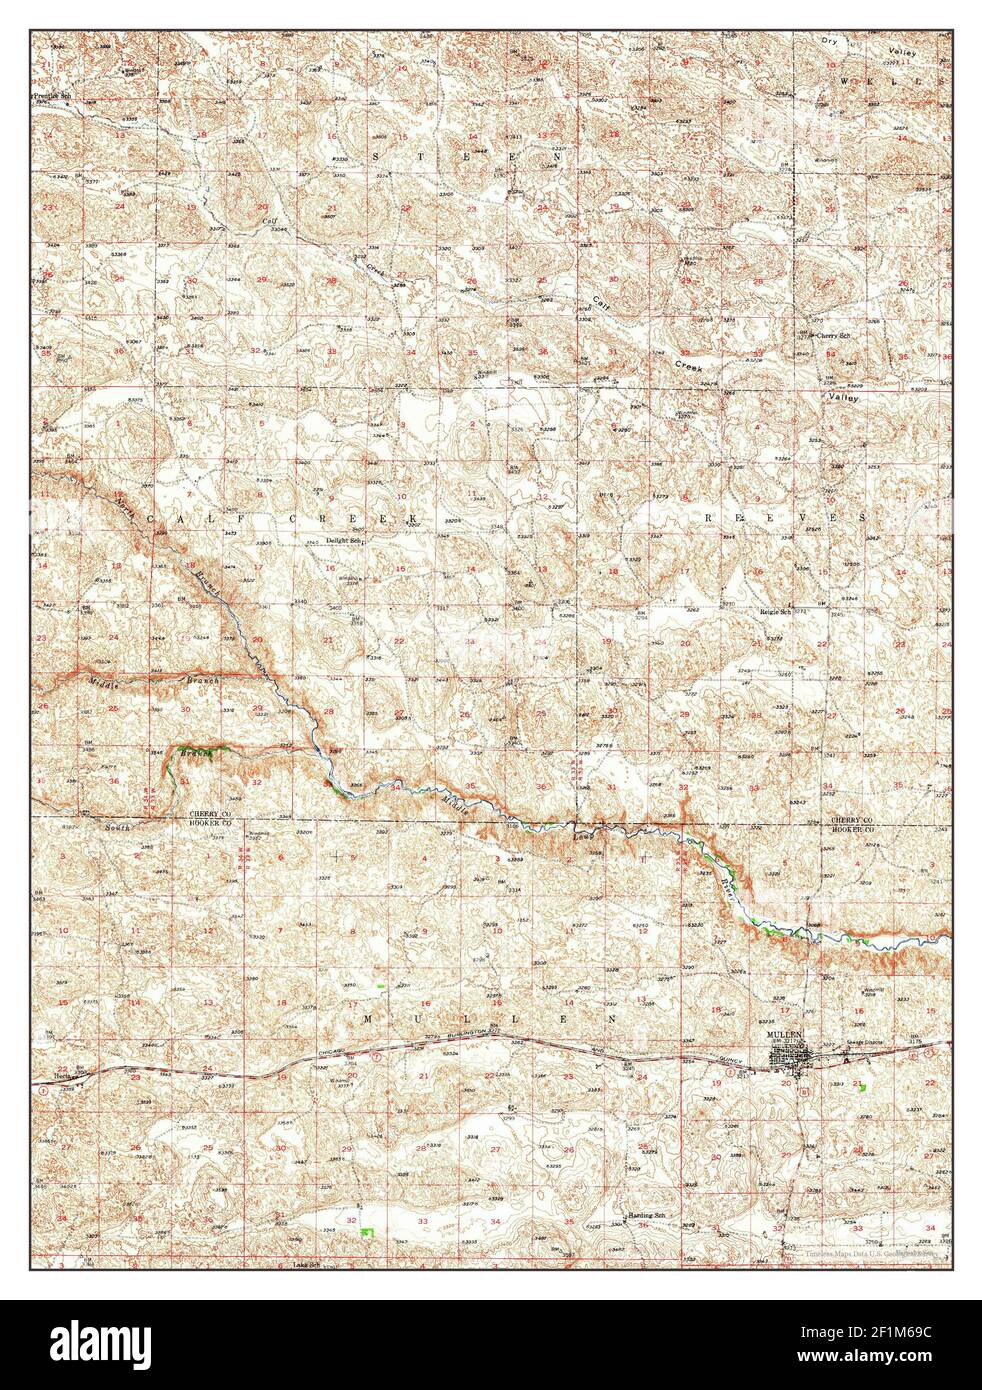 Mullen, Nebraska, map 1948, 1:62500, United States of America by Timeless Maps, data U.S. Geological Survey Stock Photo